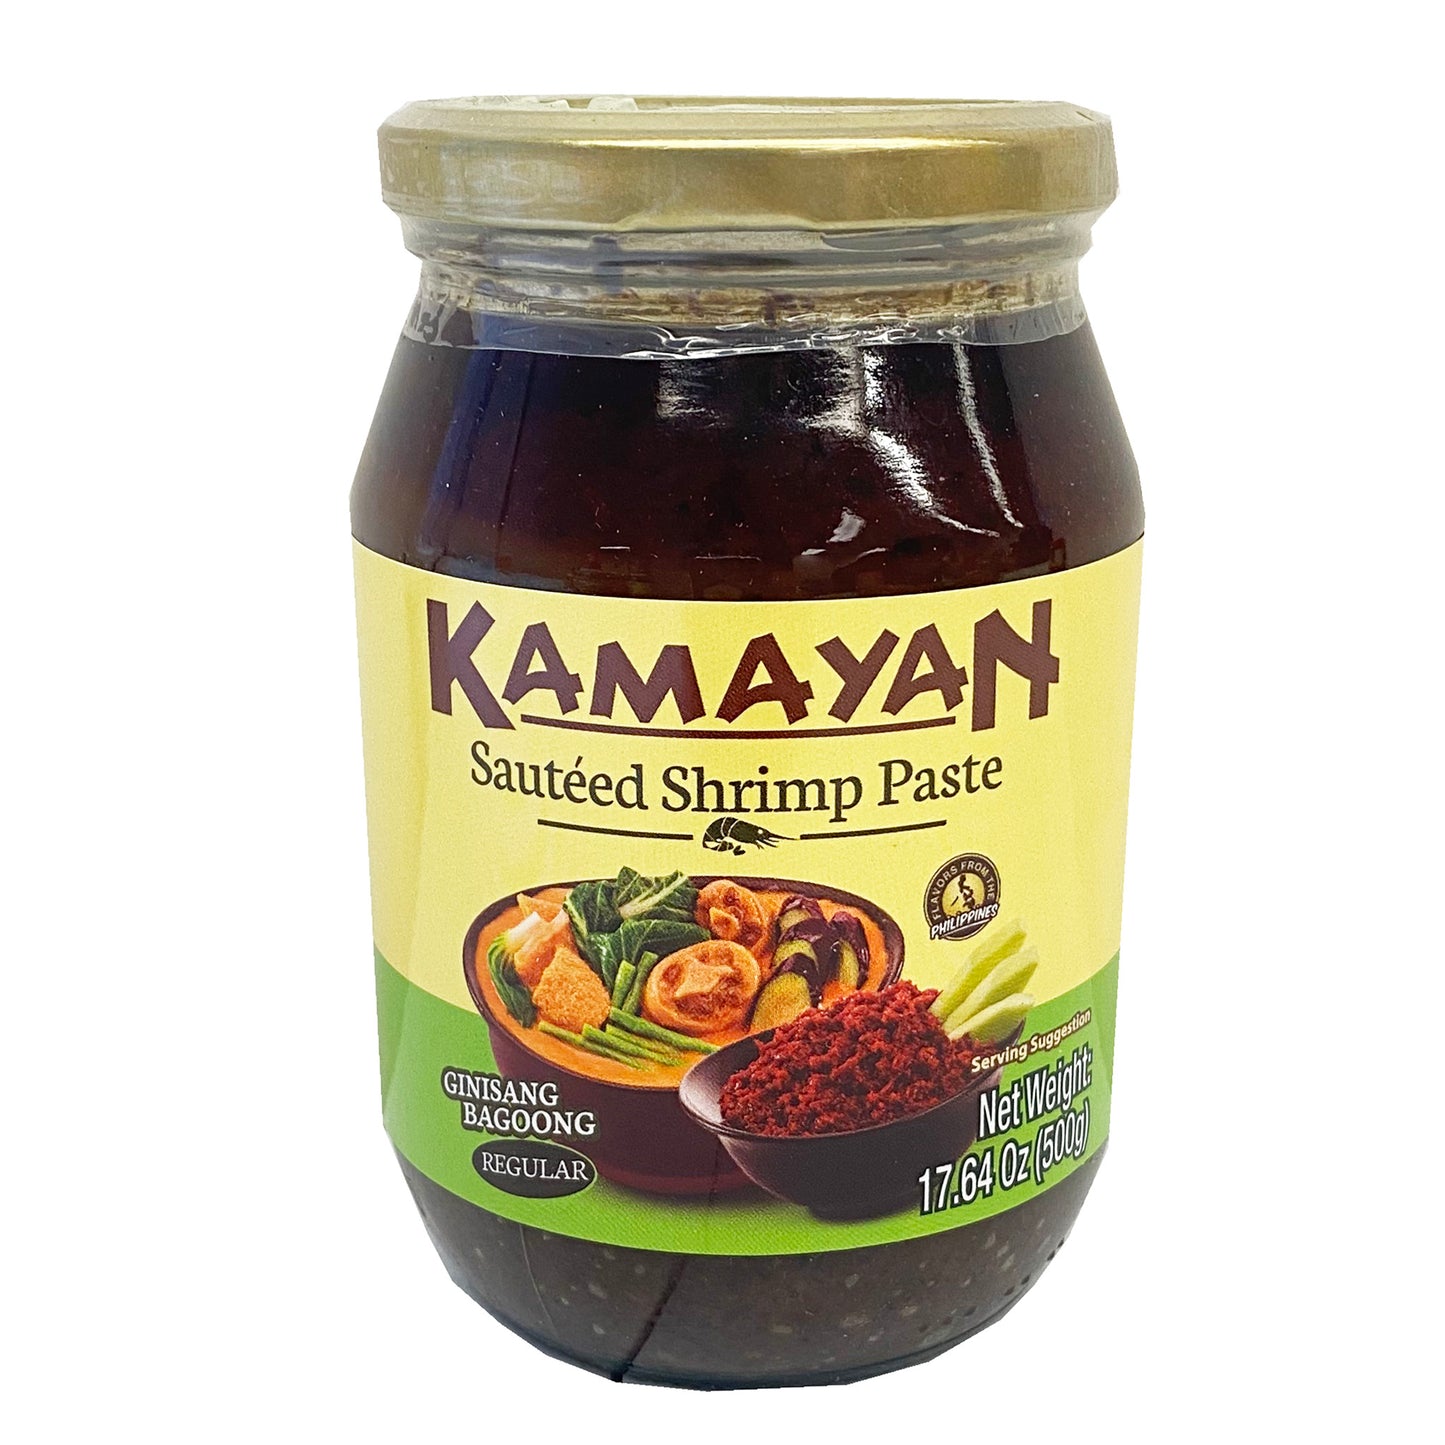 Front graphic image of Kamayan Sauteed Shrimp Paste - Ginisang Bagoong Regular 17oz